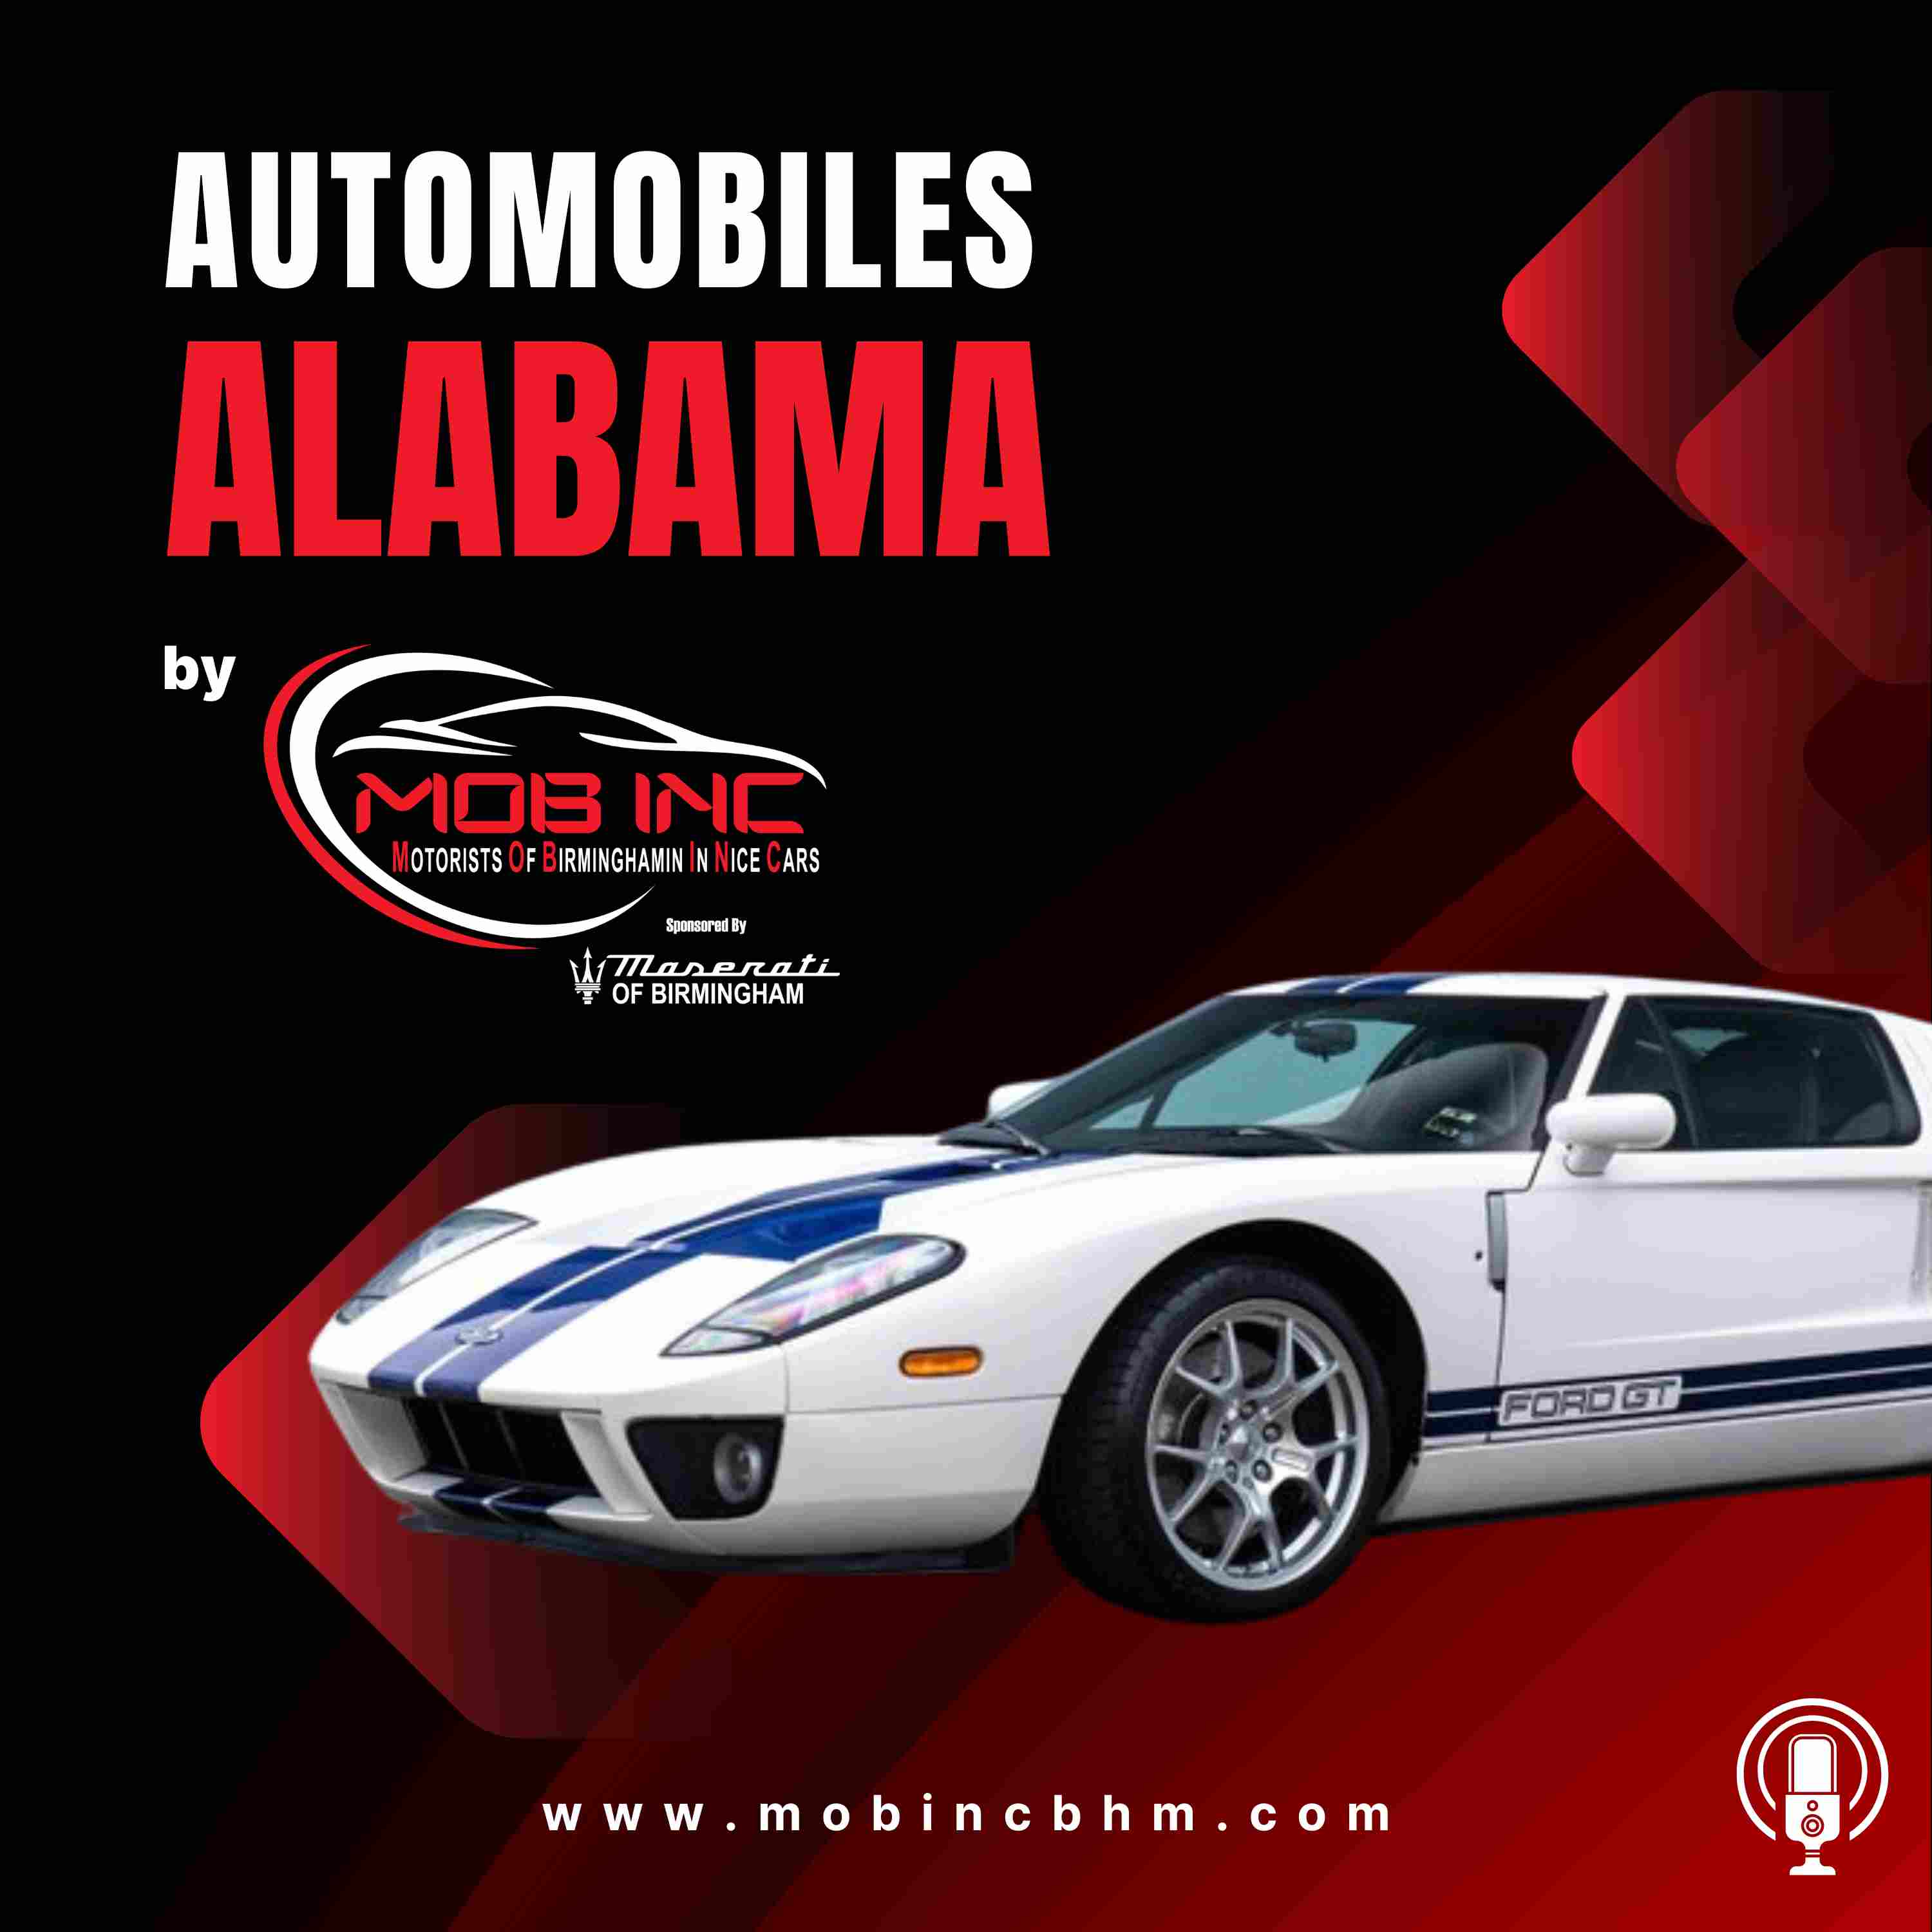 Artwork for Automobiles Alabama by MOB Inc.